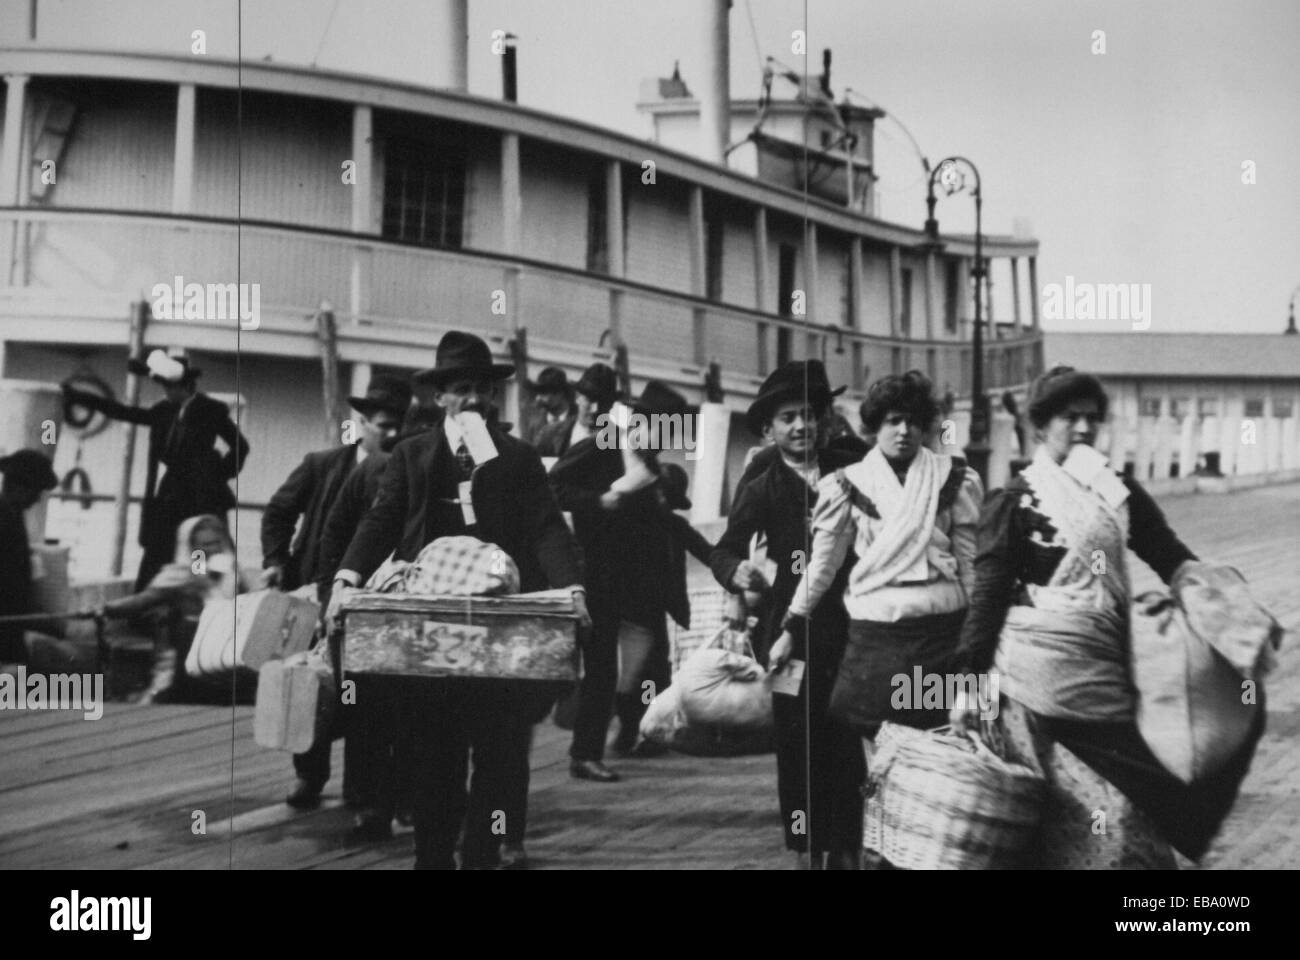 L'histoire, USA, New York. Les immigrants en provenance de l'Europe à l'Ellis Island, vers 1900 Banque D'Images